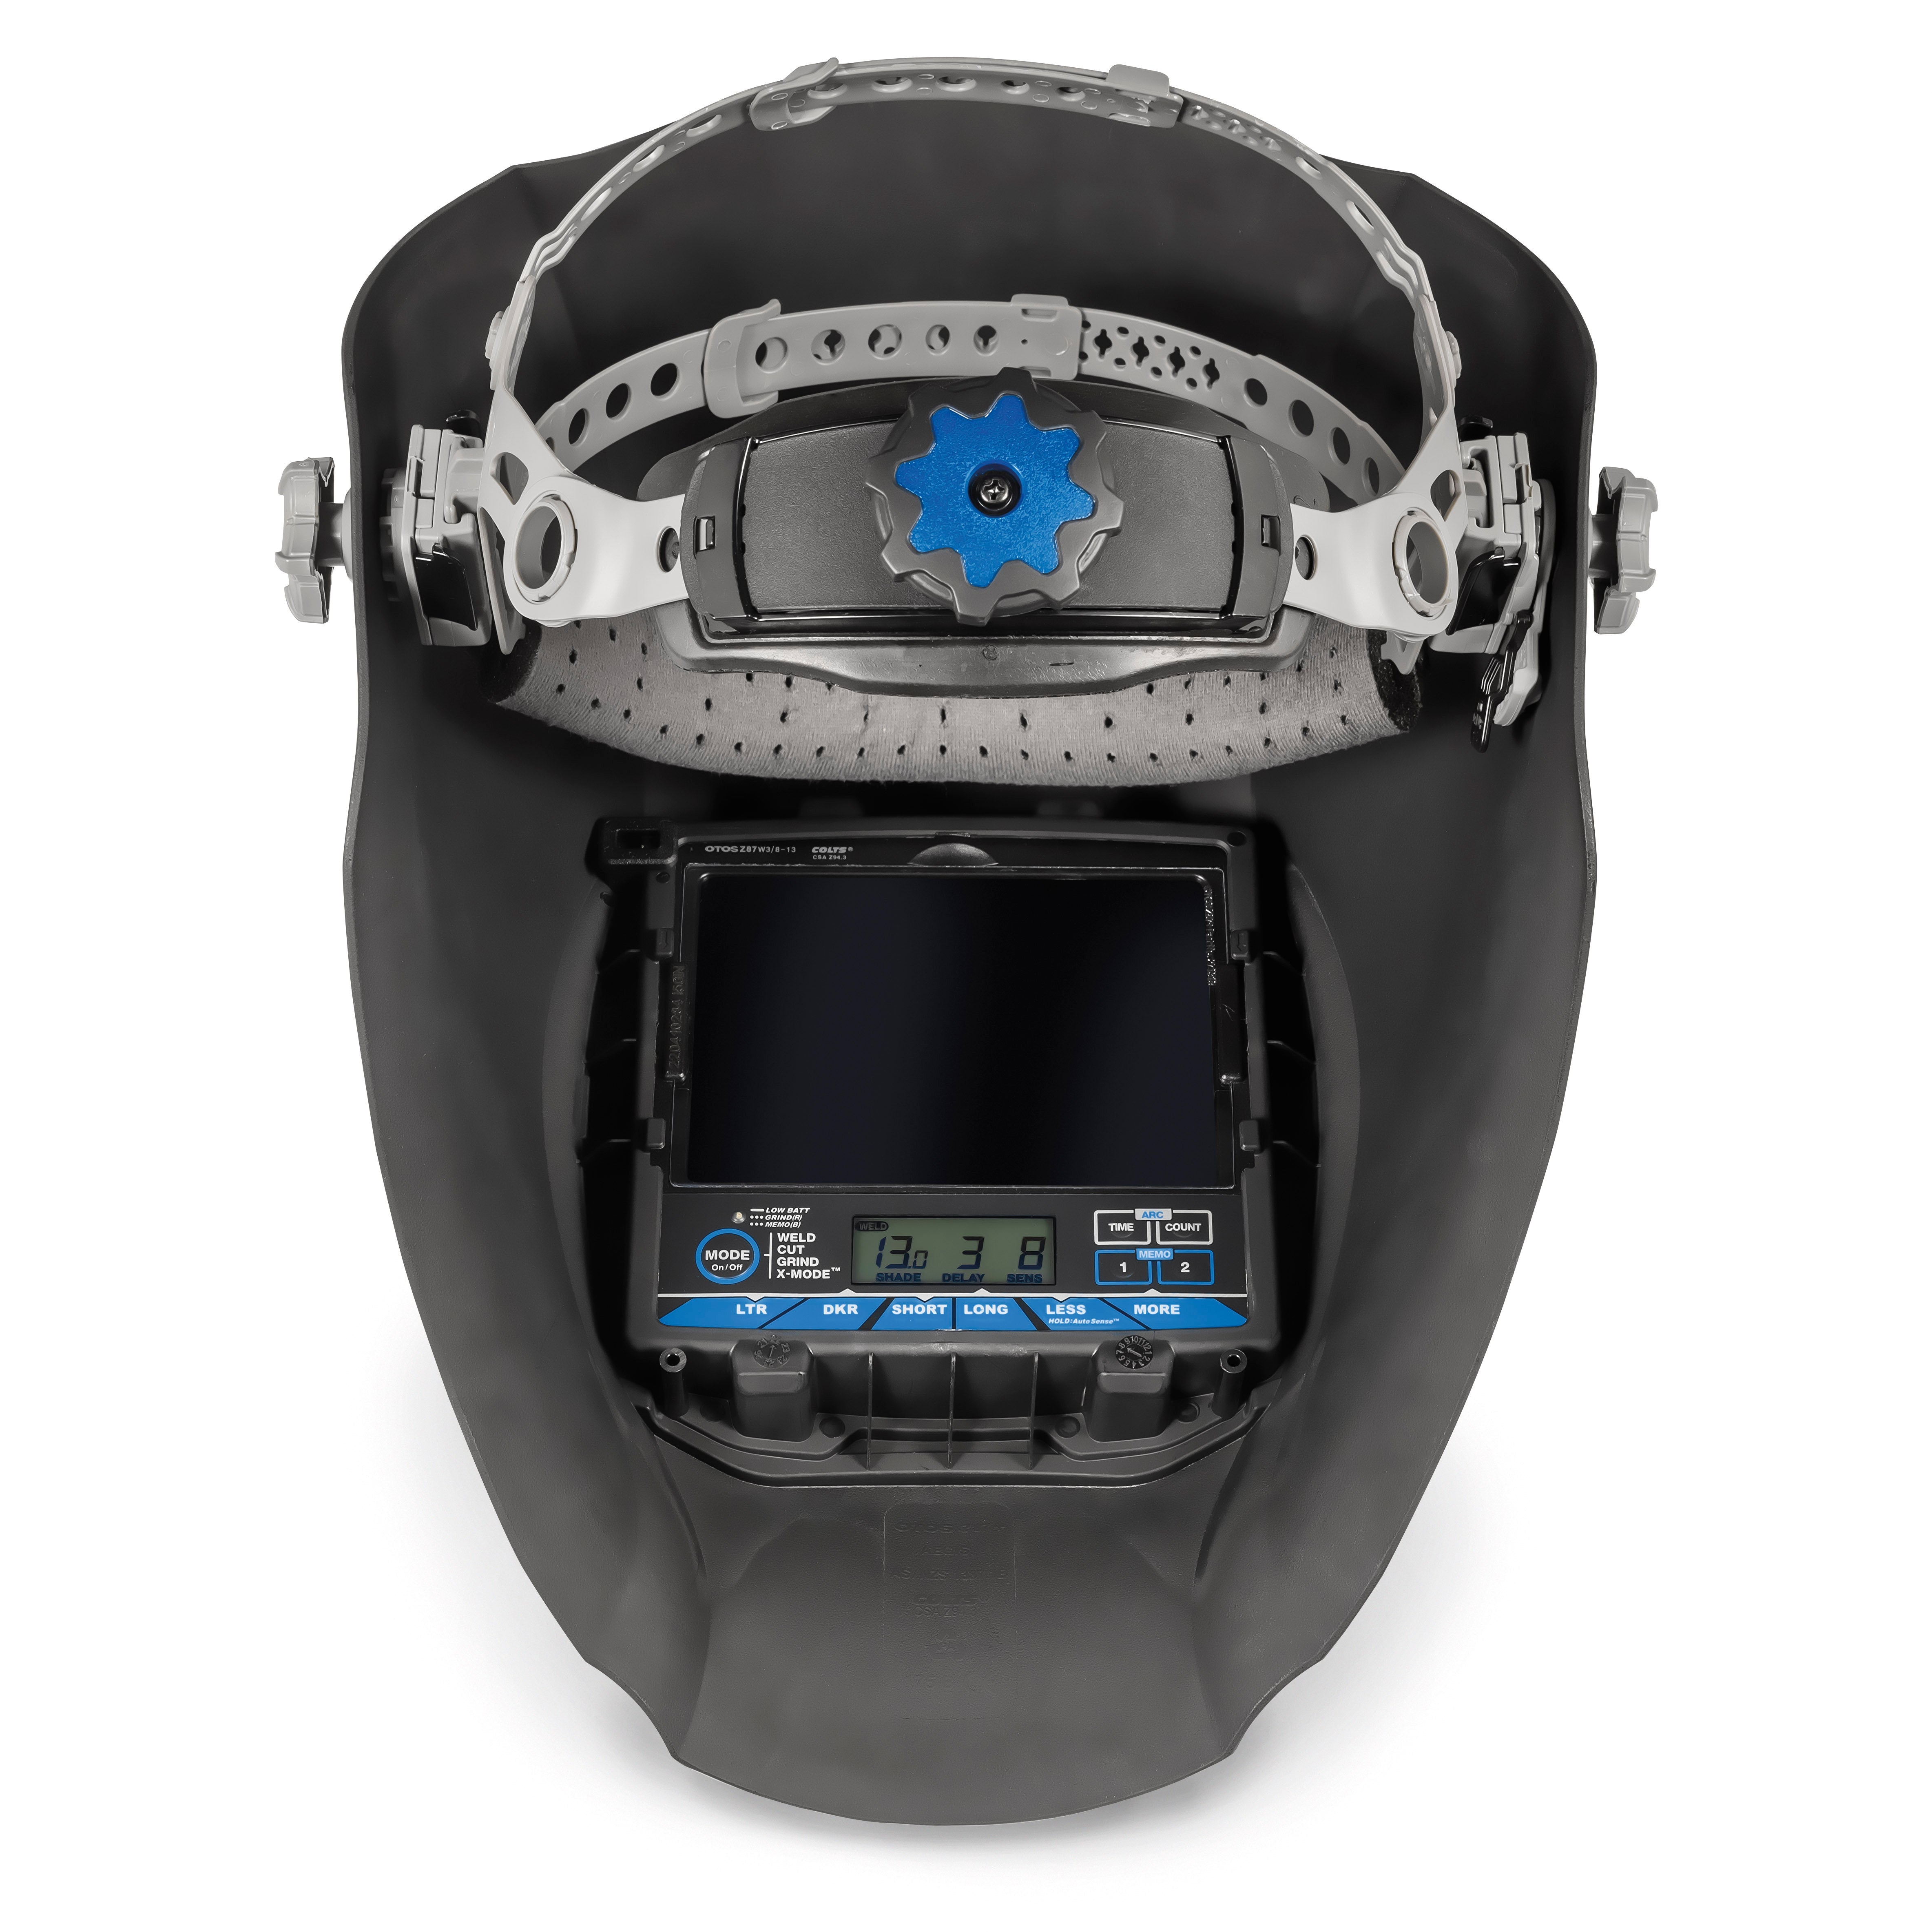 Miller Black Digital Infinity Welding Helmet w/ClearLight 2.0 Lens (289714)